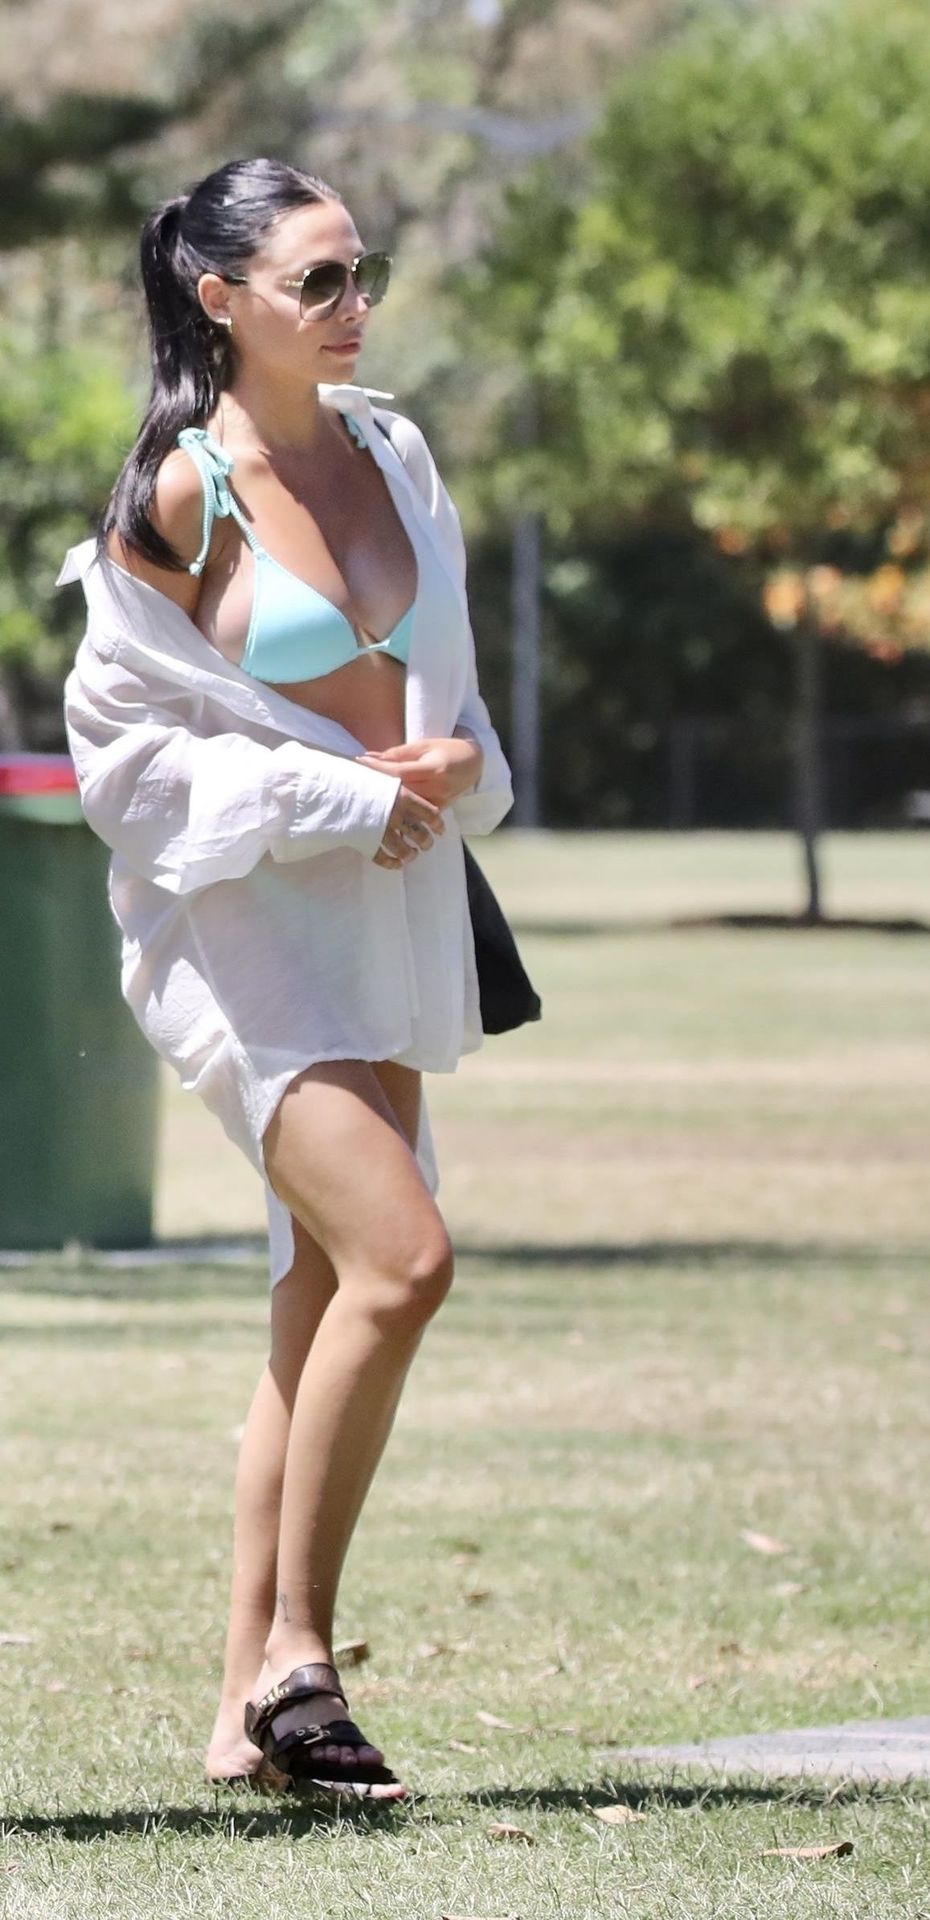 London Shay Goheen Shows Off Her Bikini Body on the Gold Coast (27 Photos)